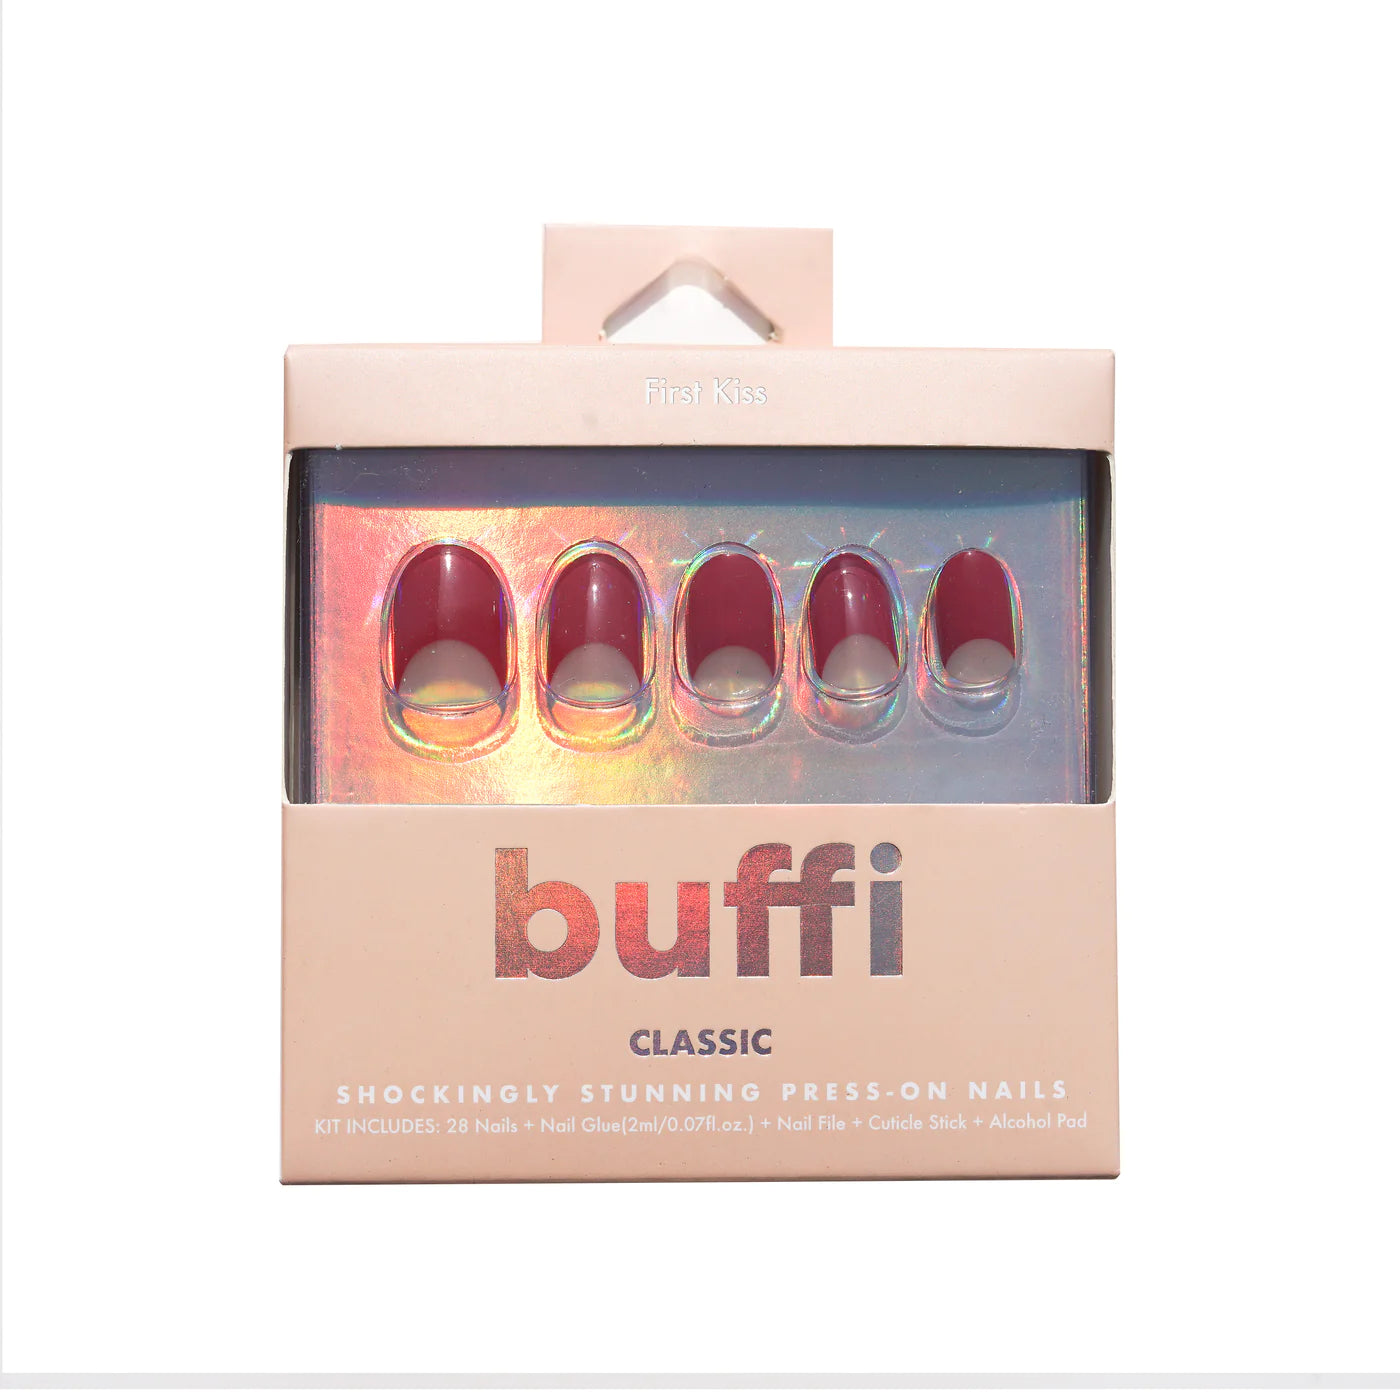 Kara Beauty - Buffi Press On Nails First Kiss